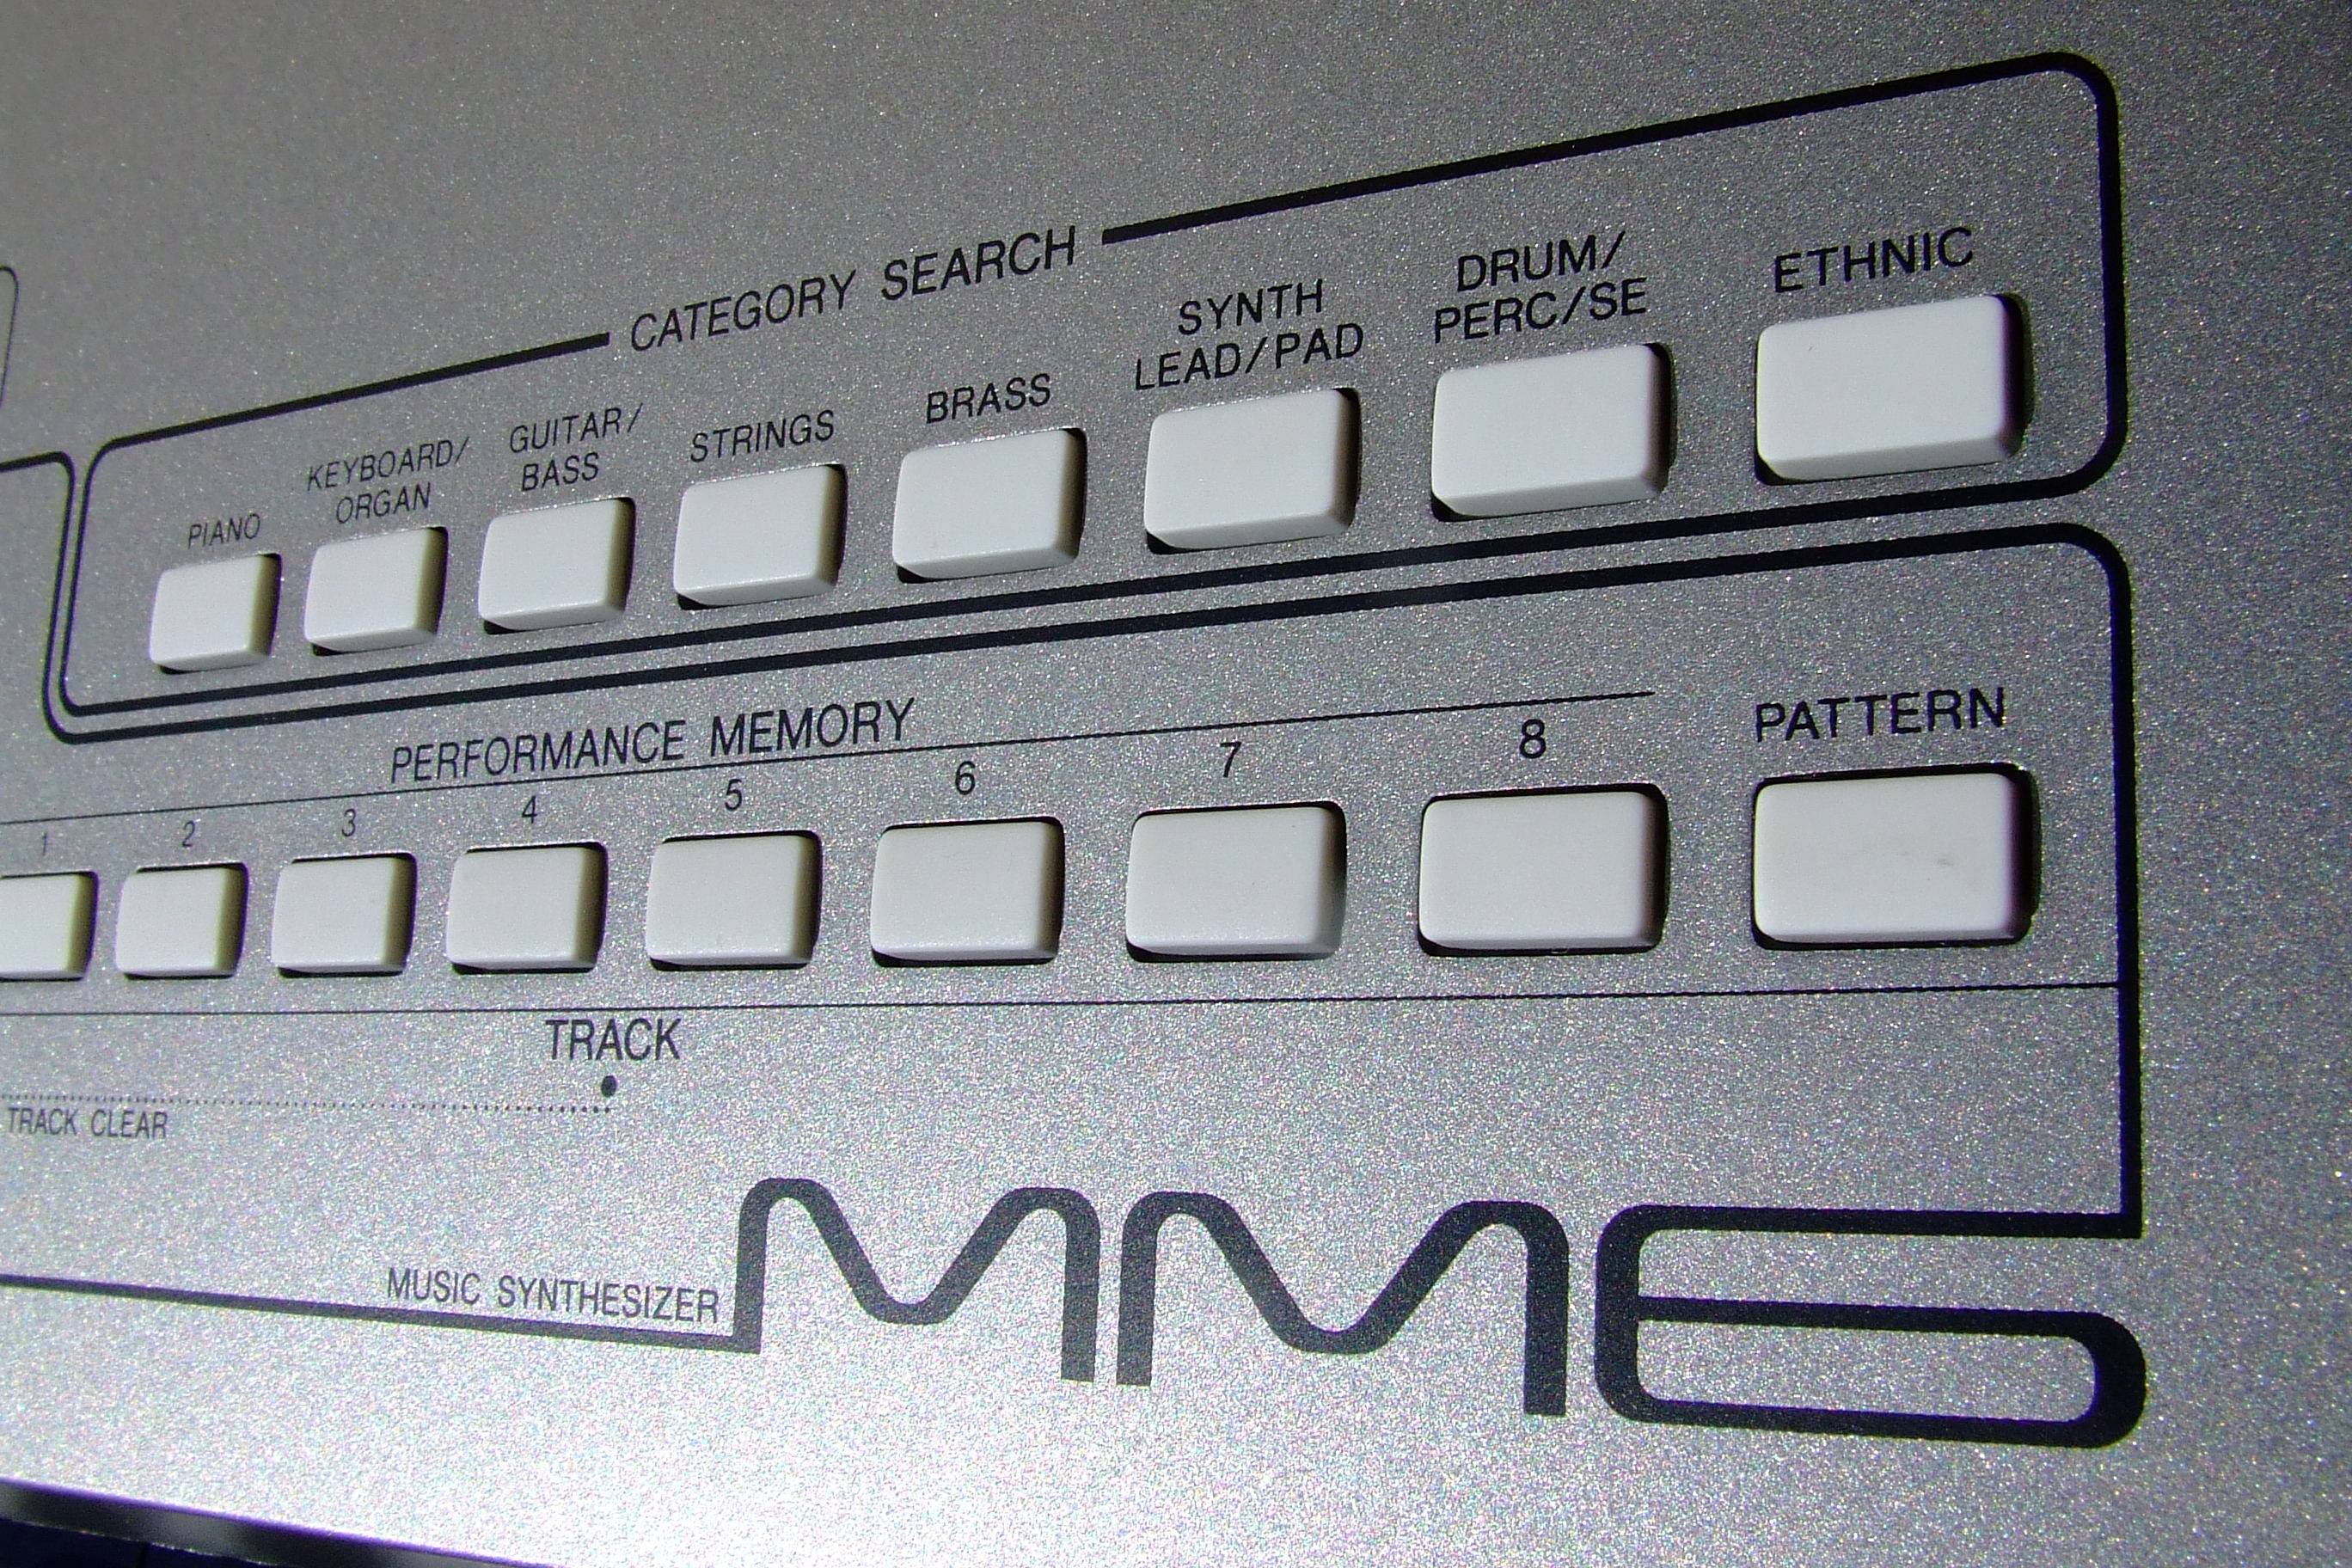 Yamaha MM6 image (#267030) - Audiofanzine